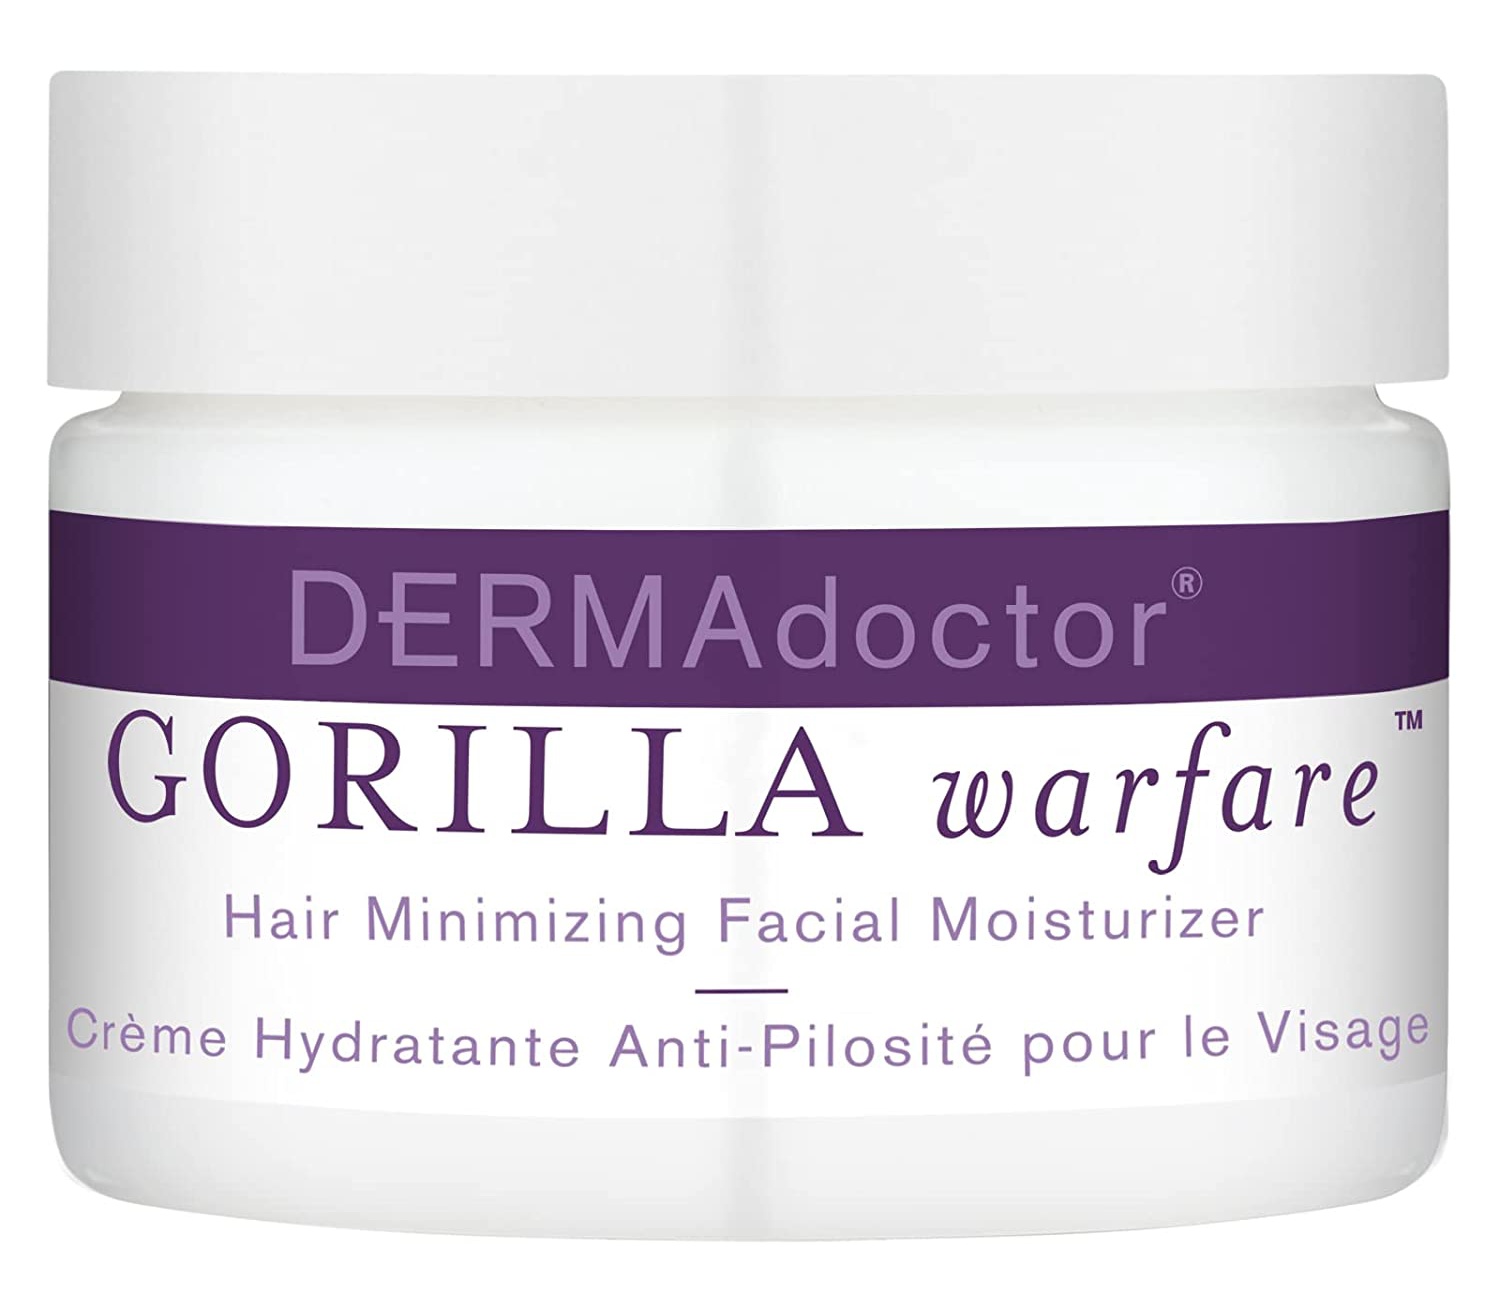 Dermadoctor Gorilla Warfare Hair Minimizing Facial Moisturizer